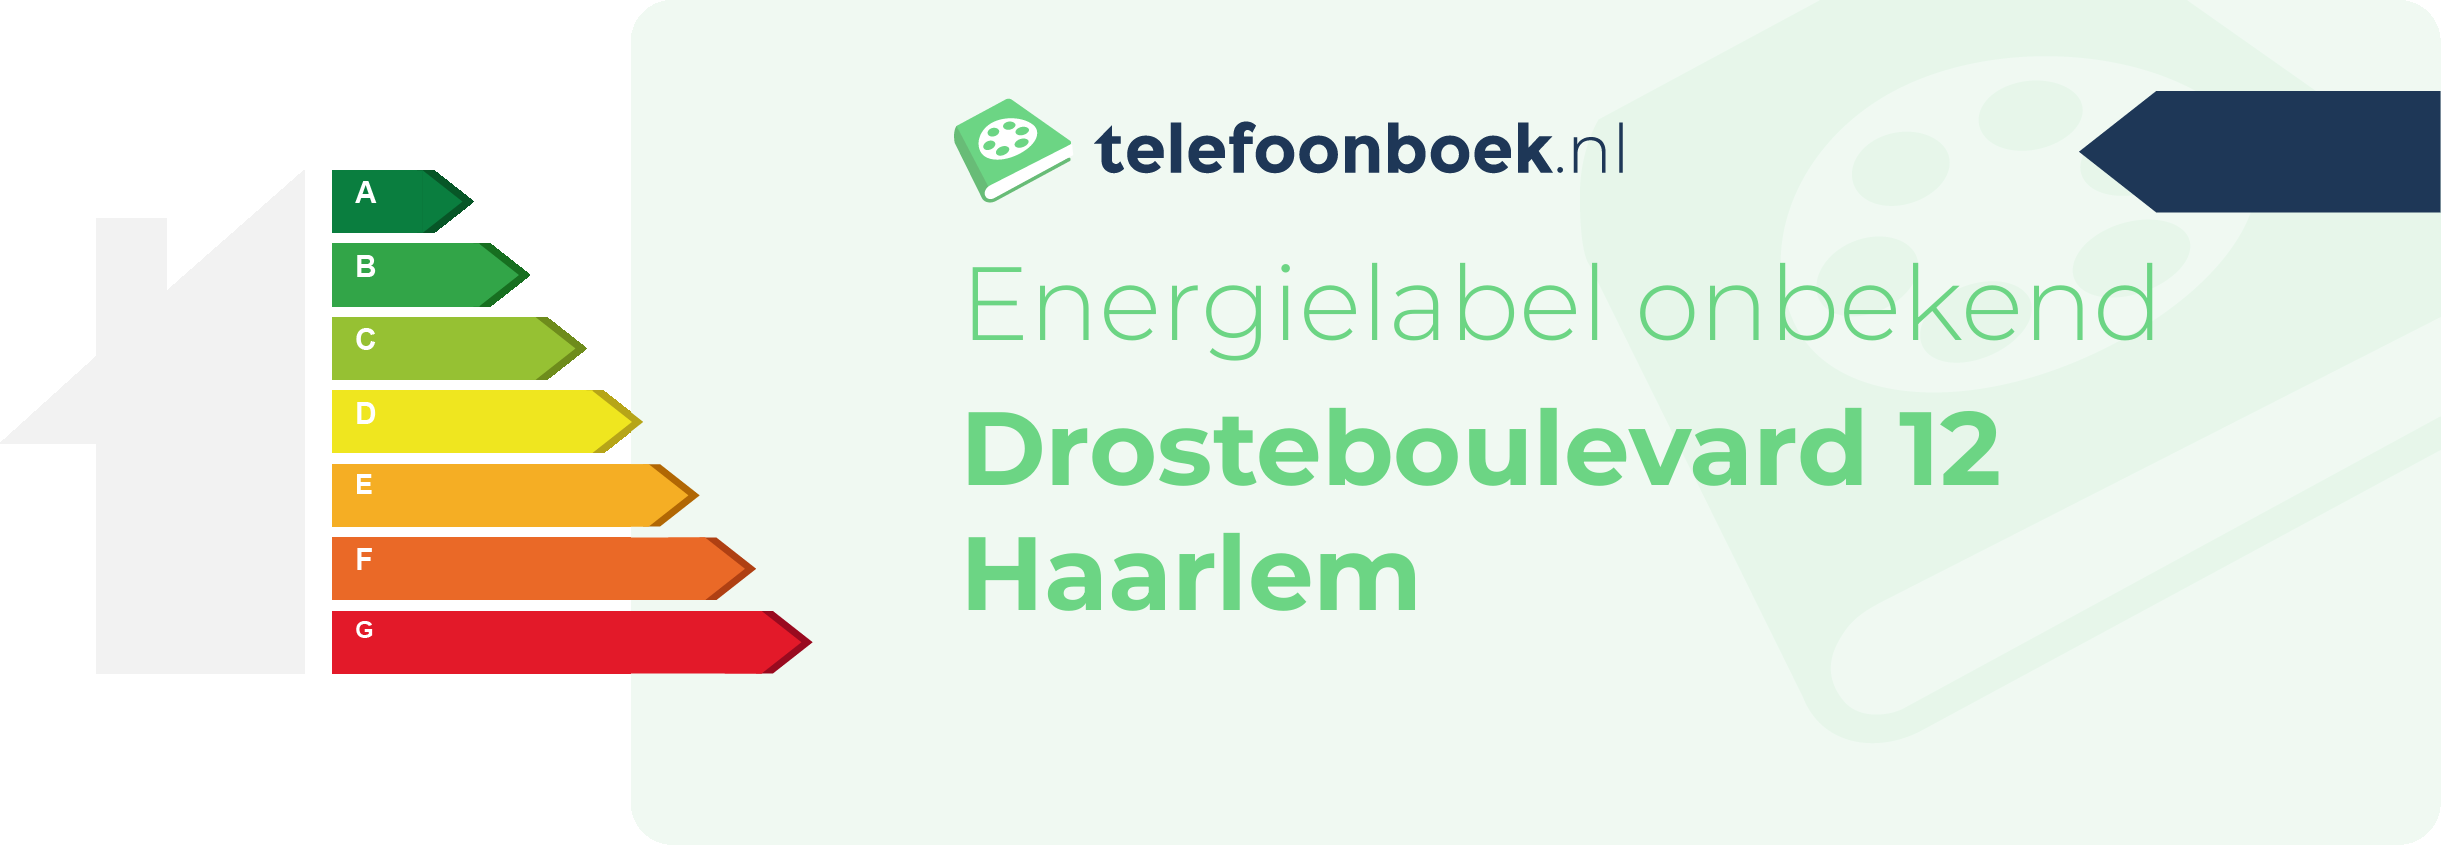 Energielabel Drosteboulevard 12 Haarlem